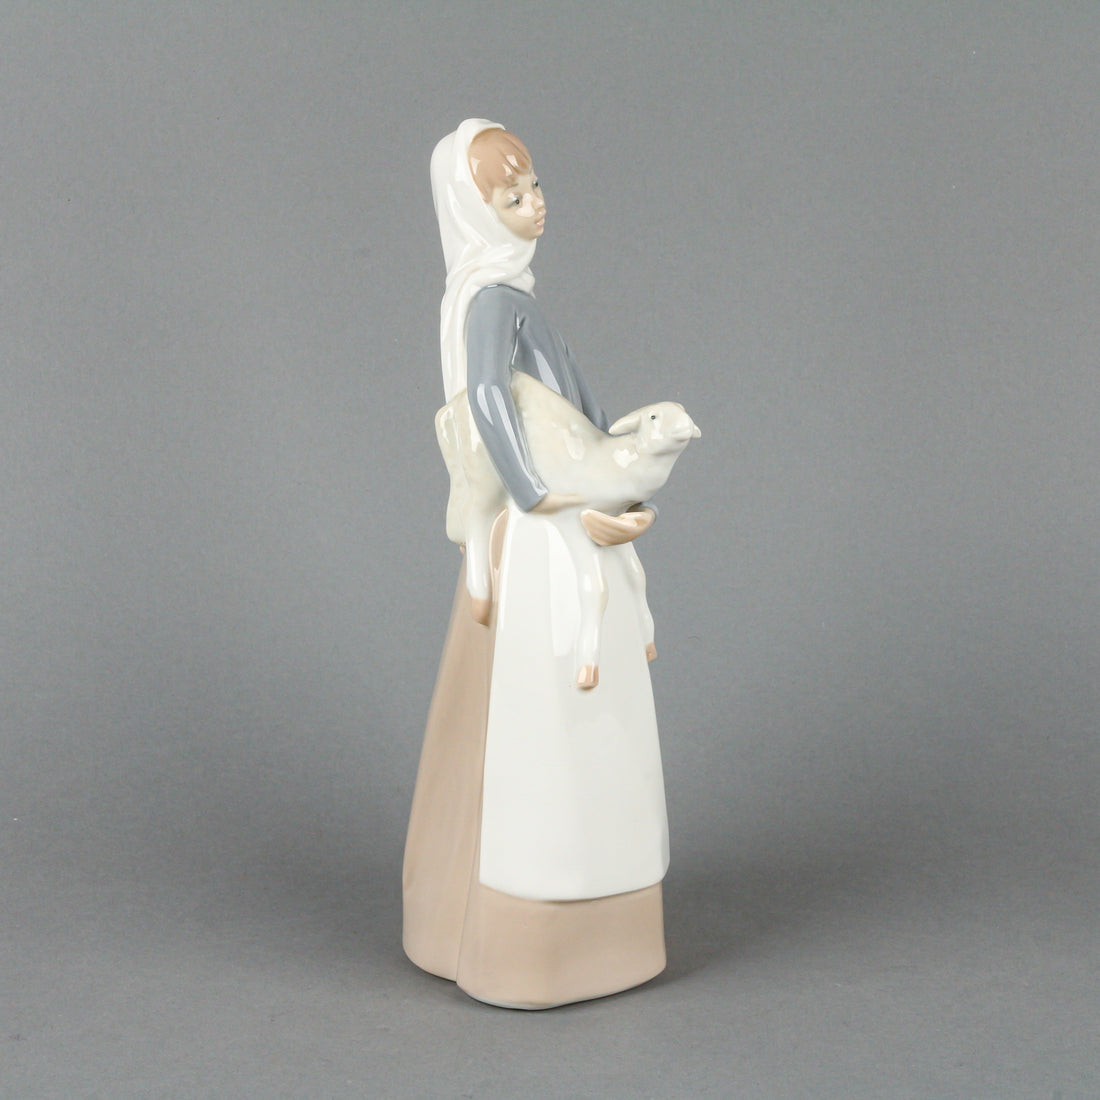 LLADRO Girl with Lamb 4584 Figurine